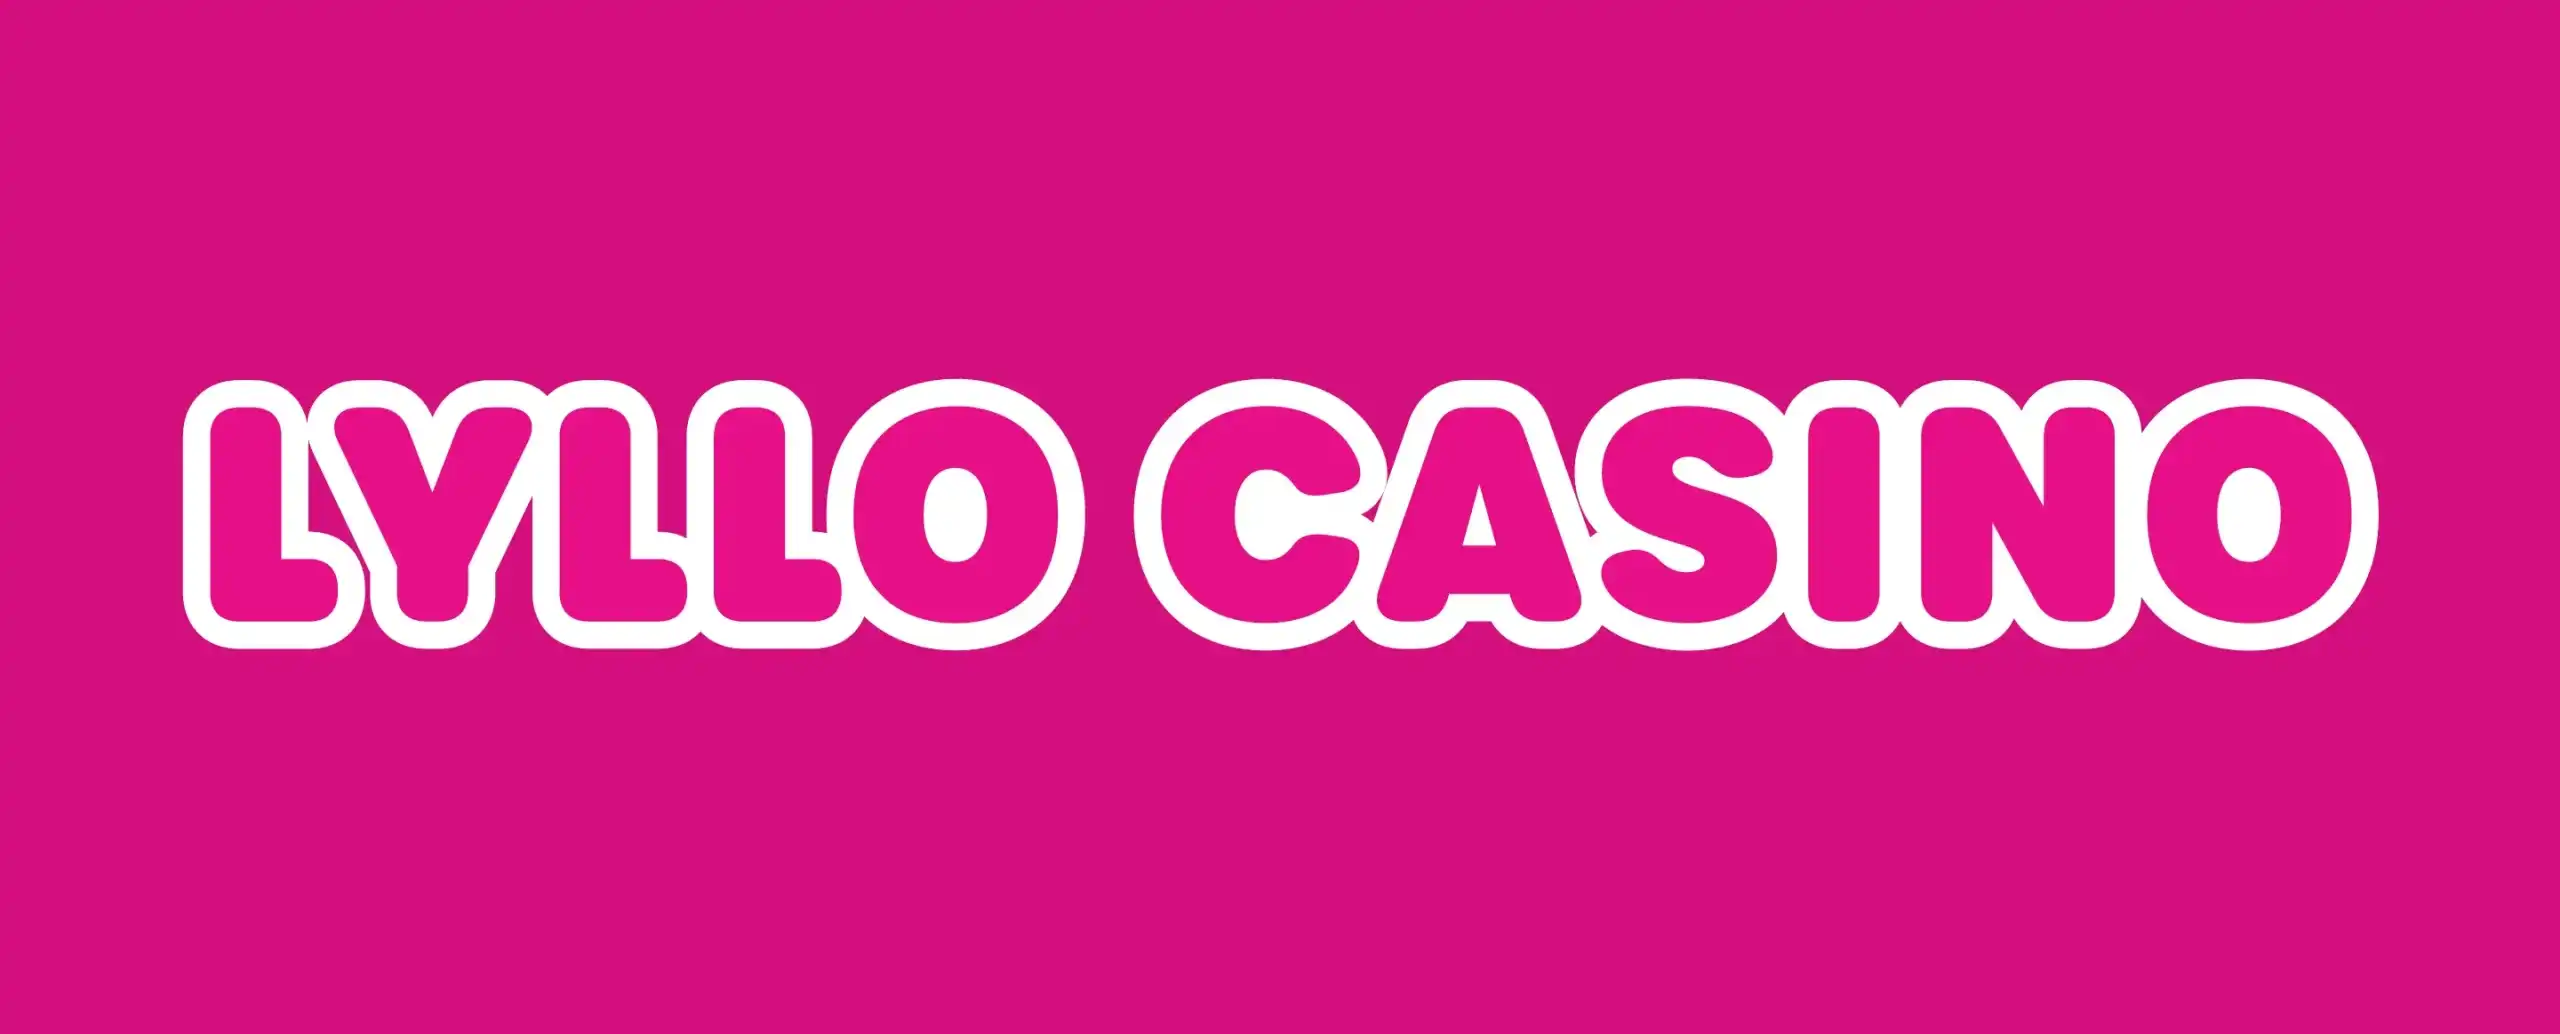 Lyllo Casino logo pink